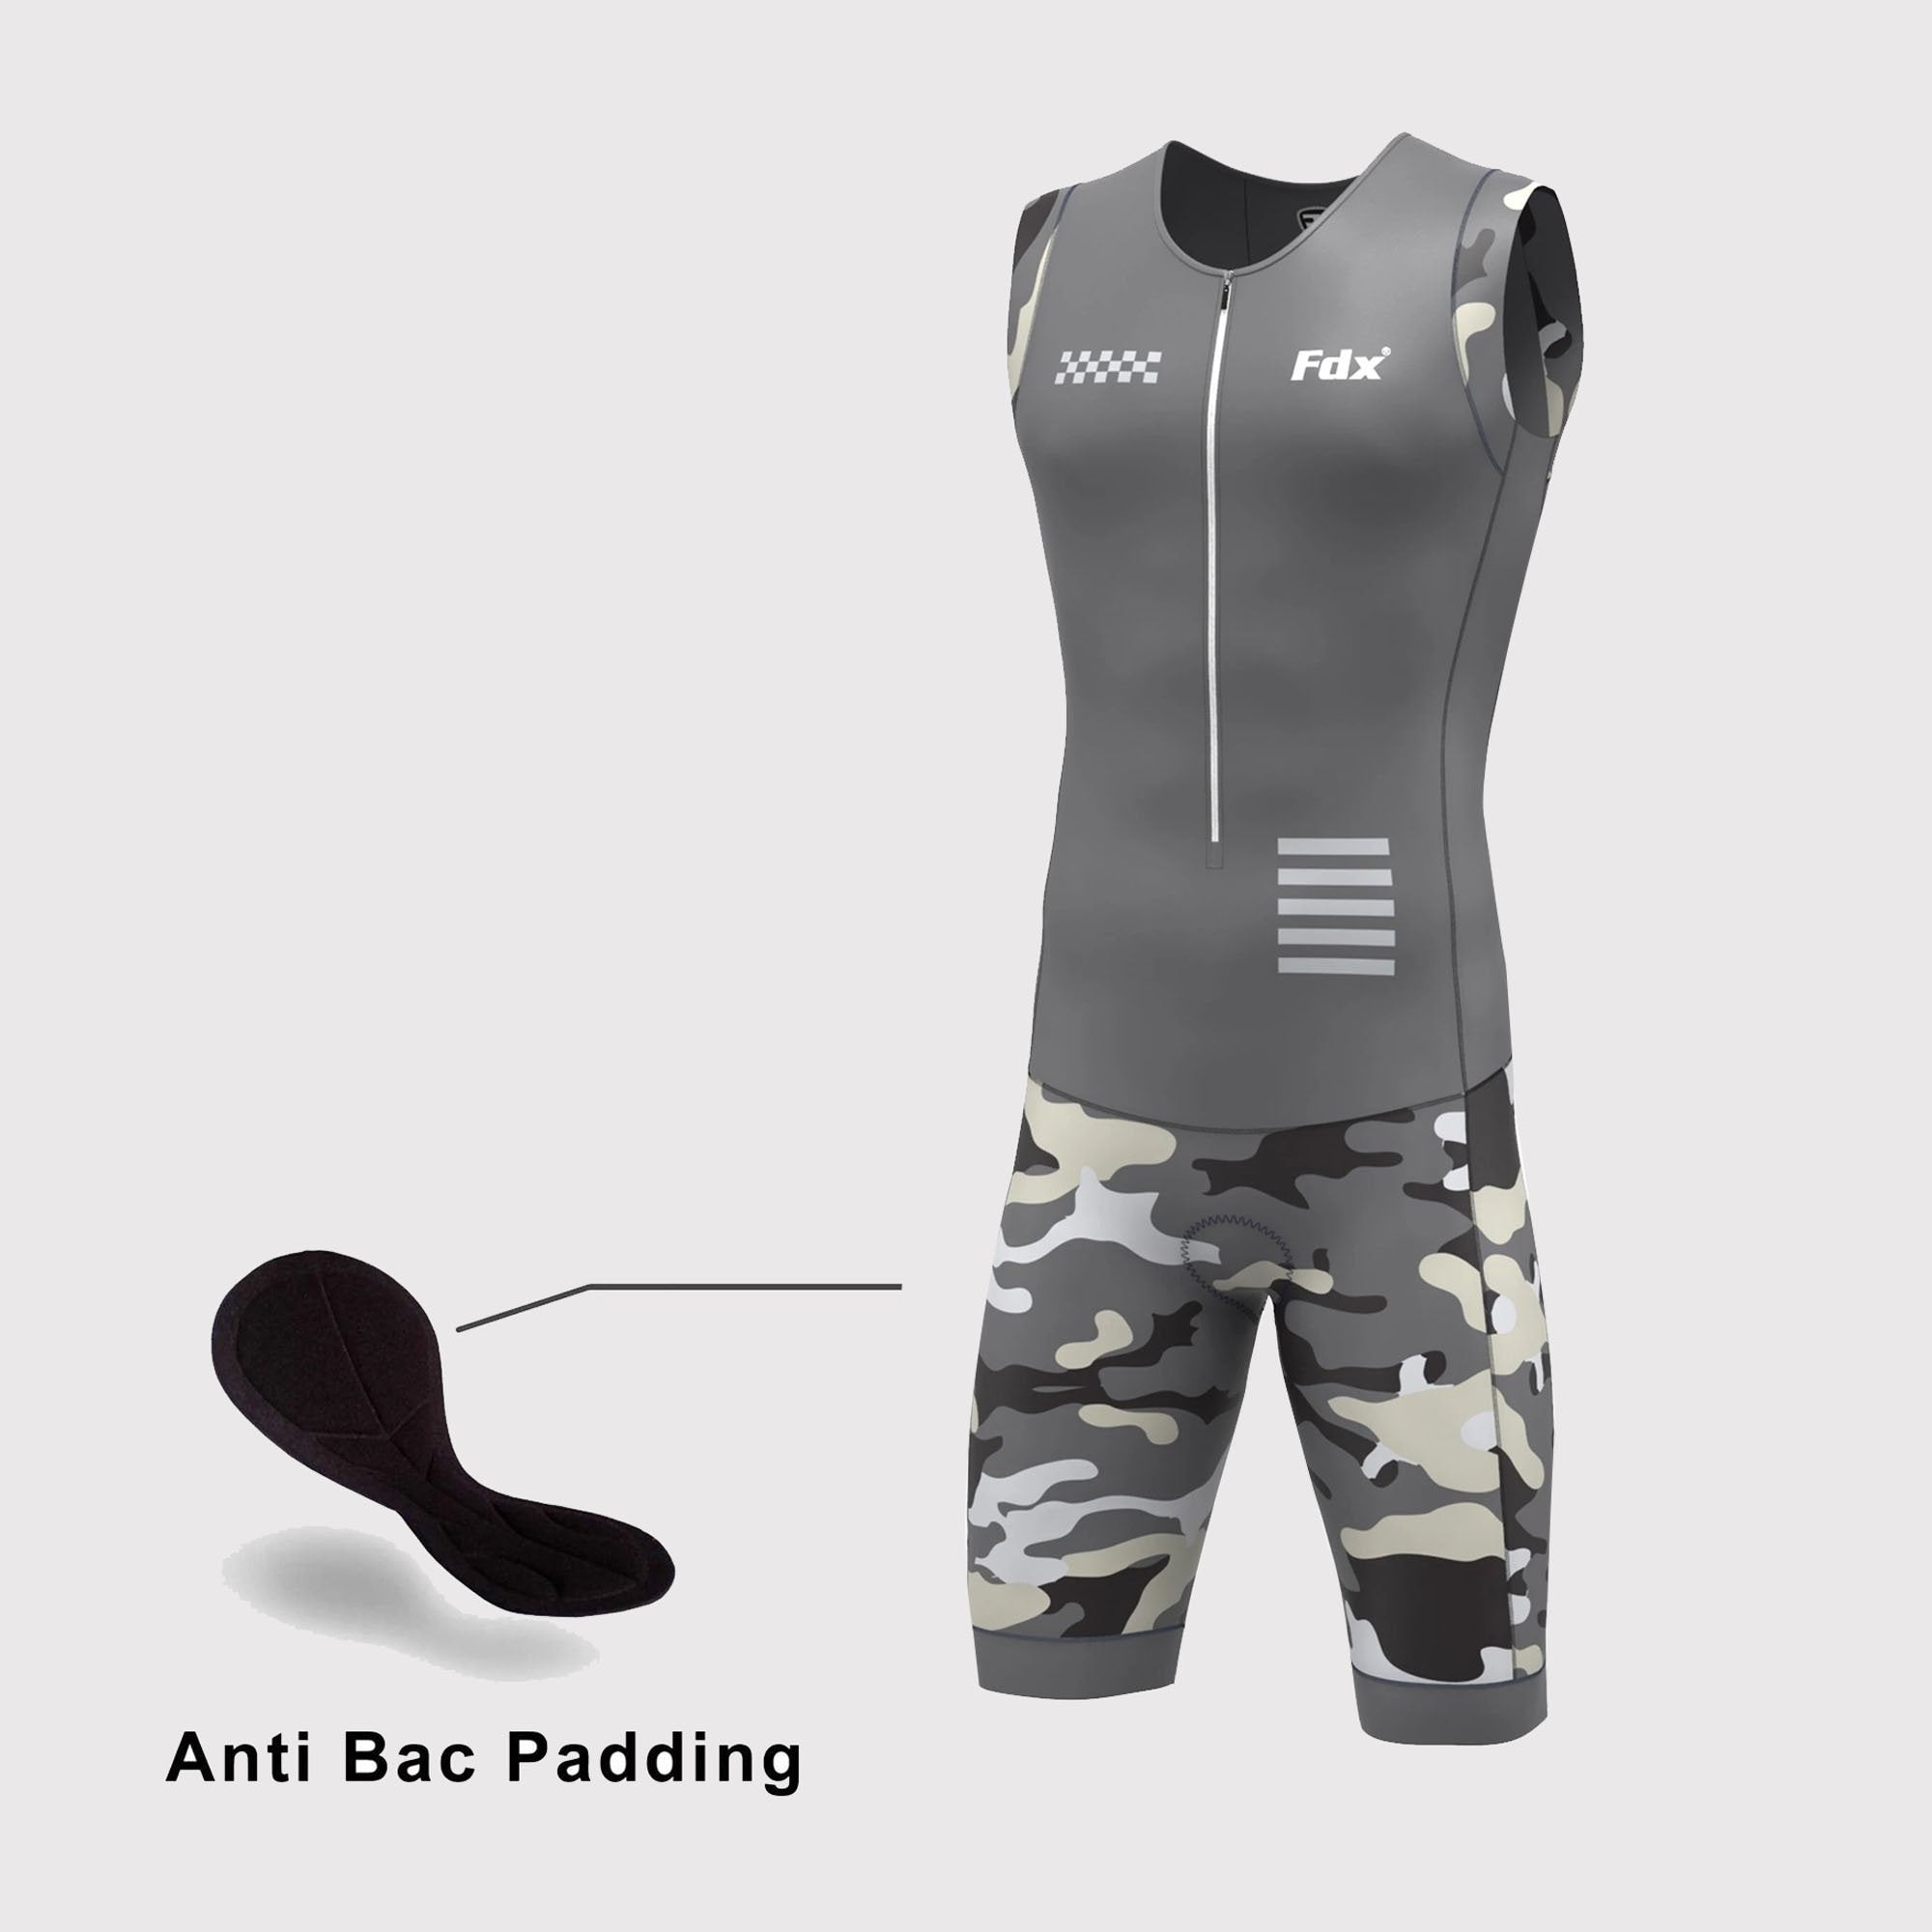 Fdx Camouflage Grey Men's Padded Triathlon Suit